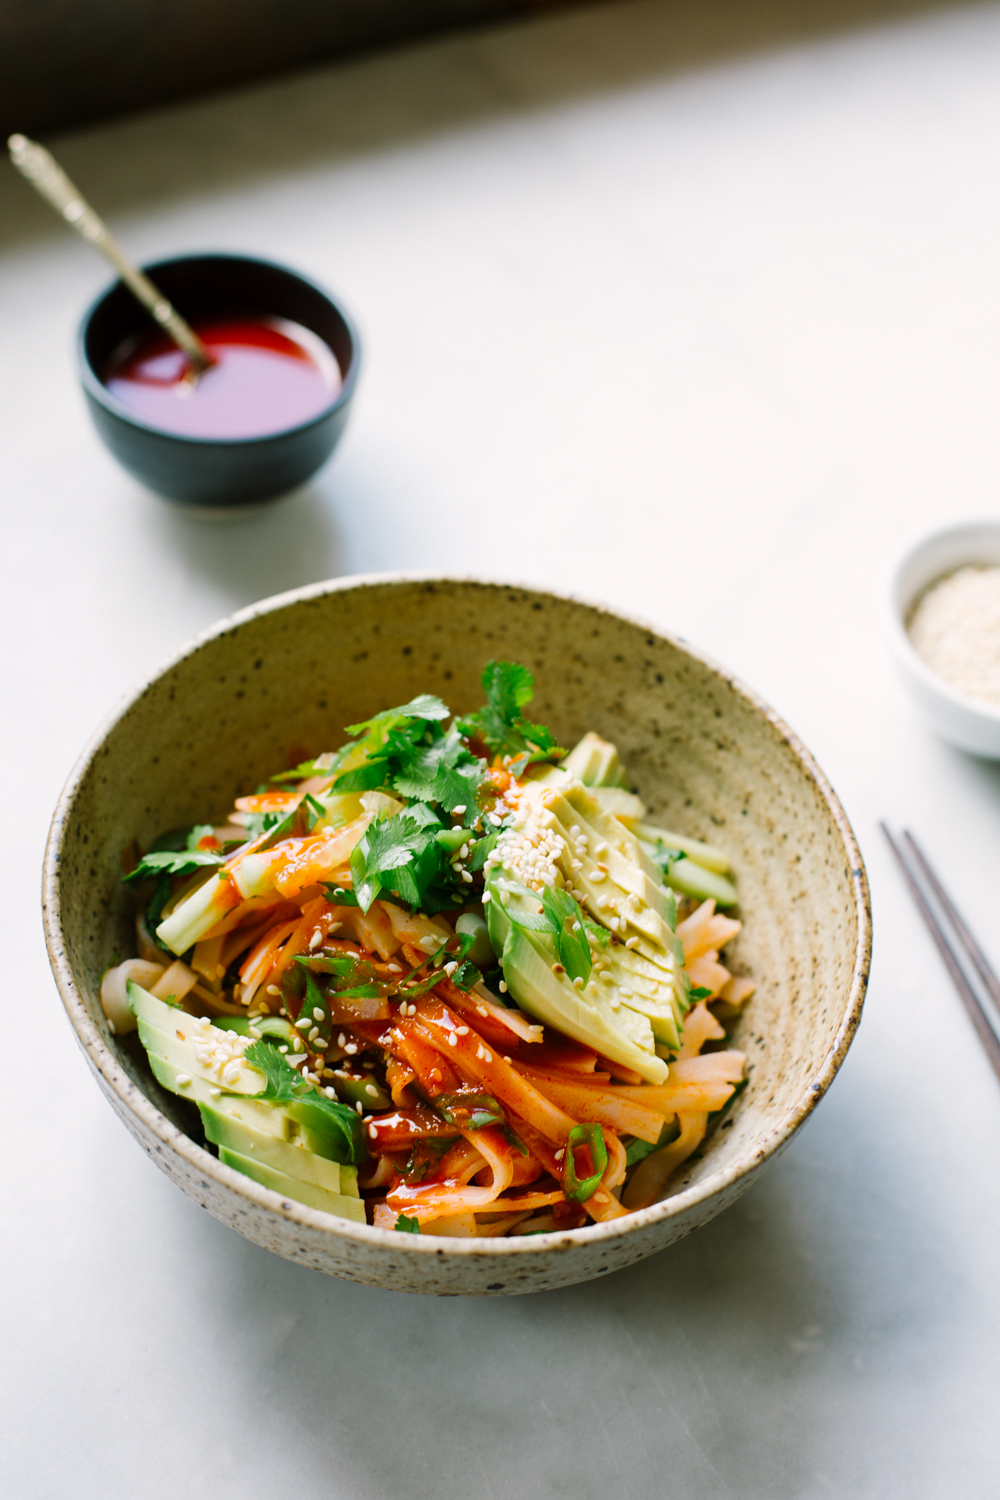 Avocado noodle salad with gochujang dressing – My Darling Lemon Thyme